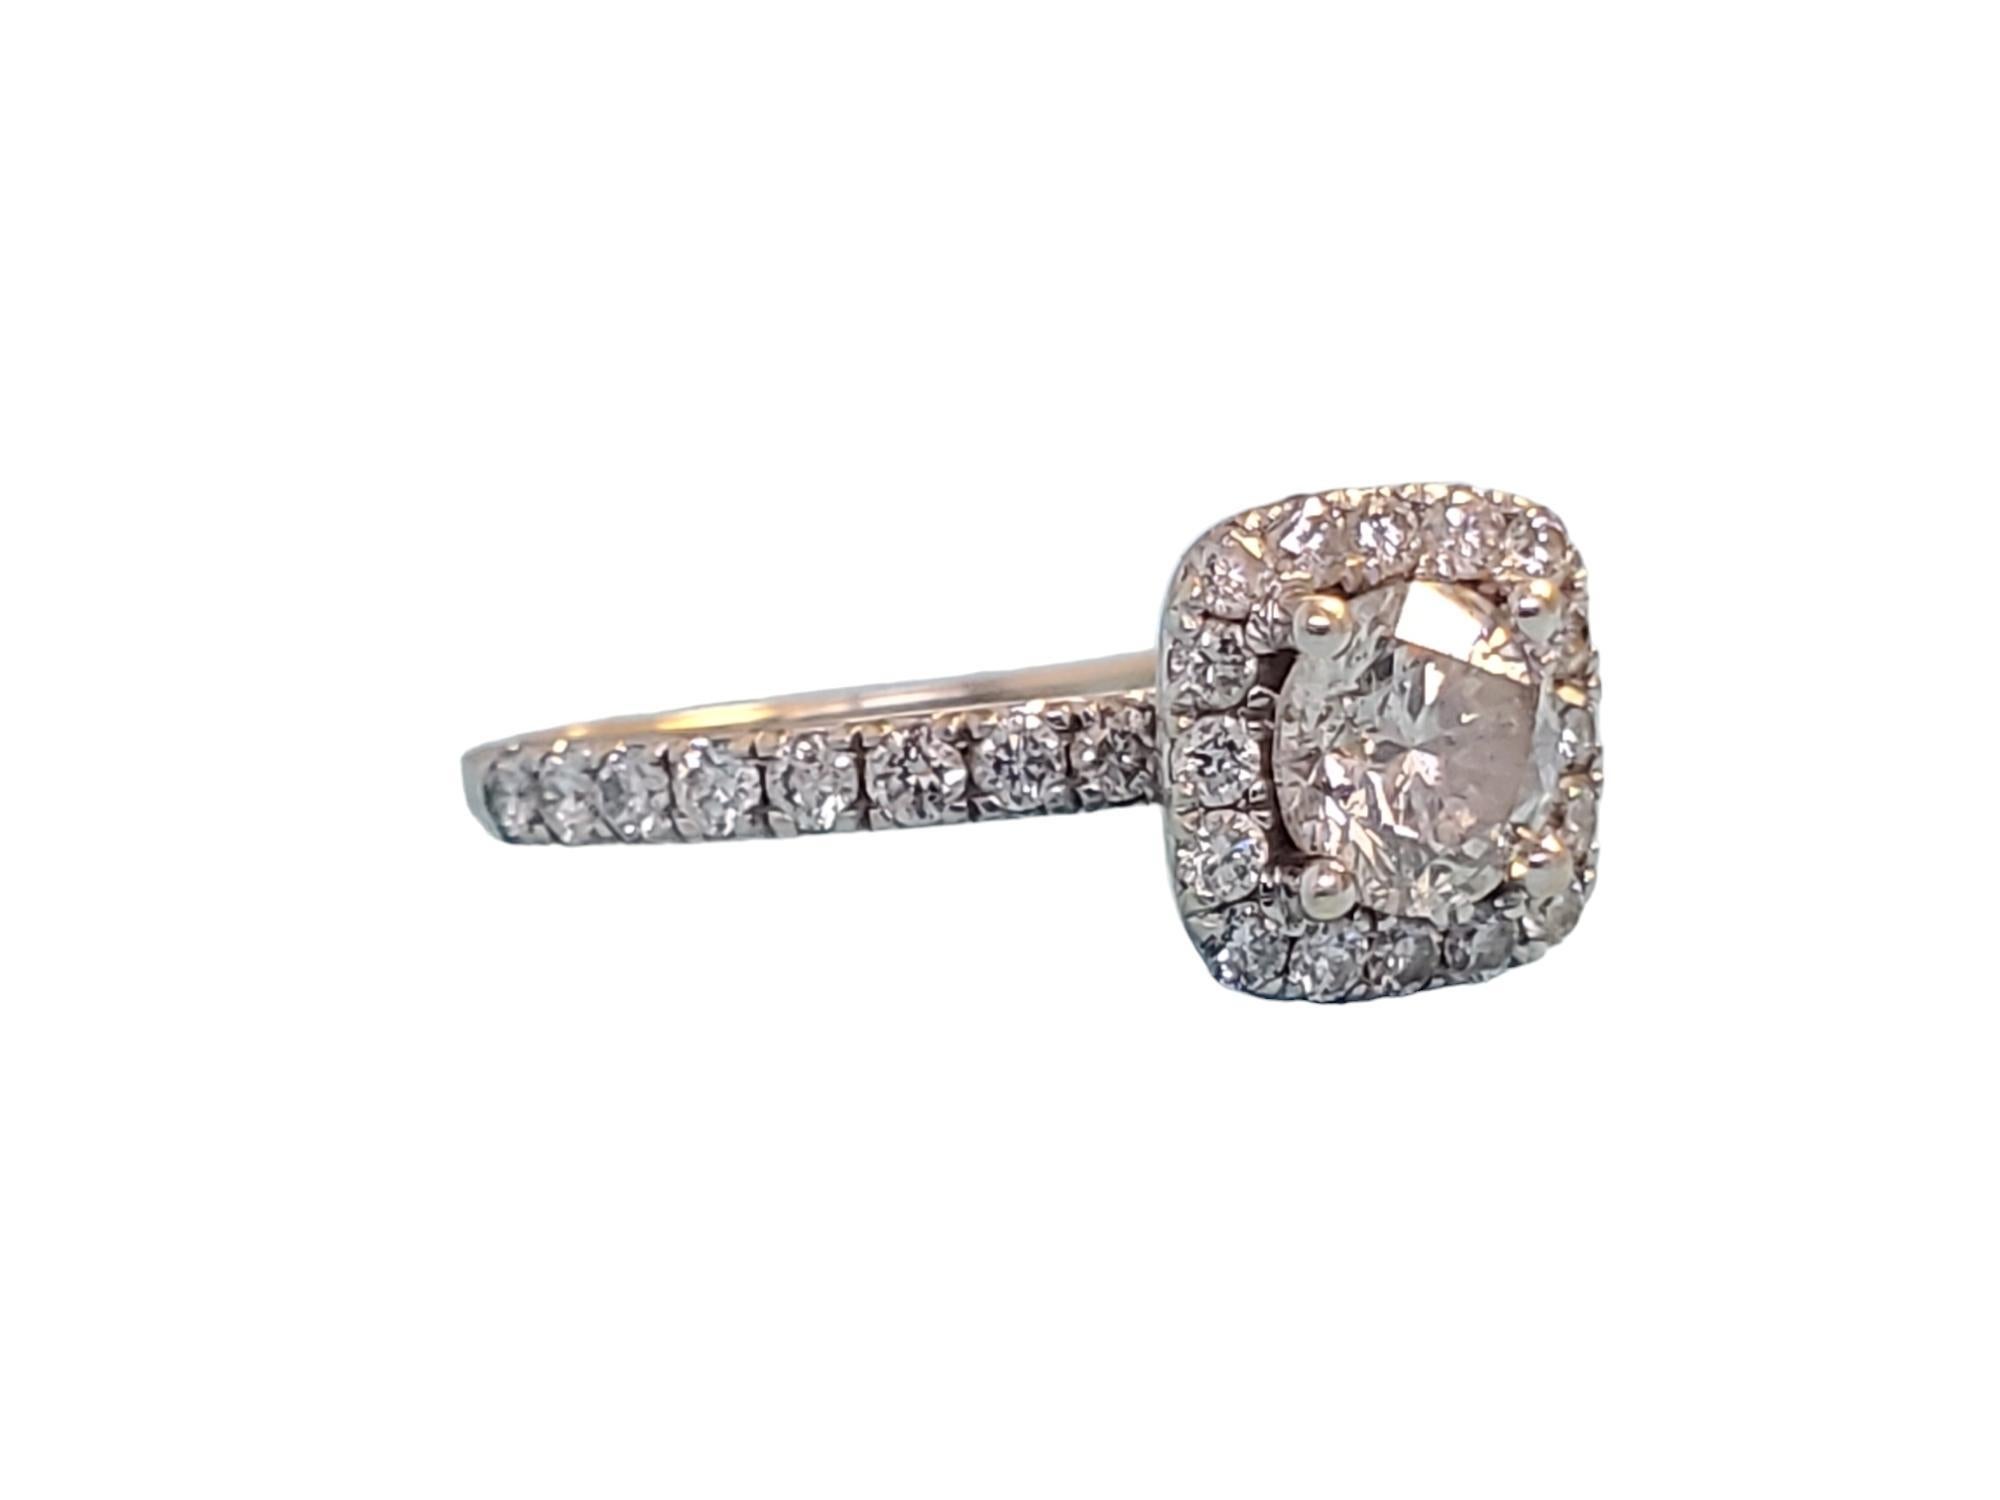 Brilliant Cut Diamond Engagement Ring 14k White Gold 1.25tcw Natural Diamonds For Sale